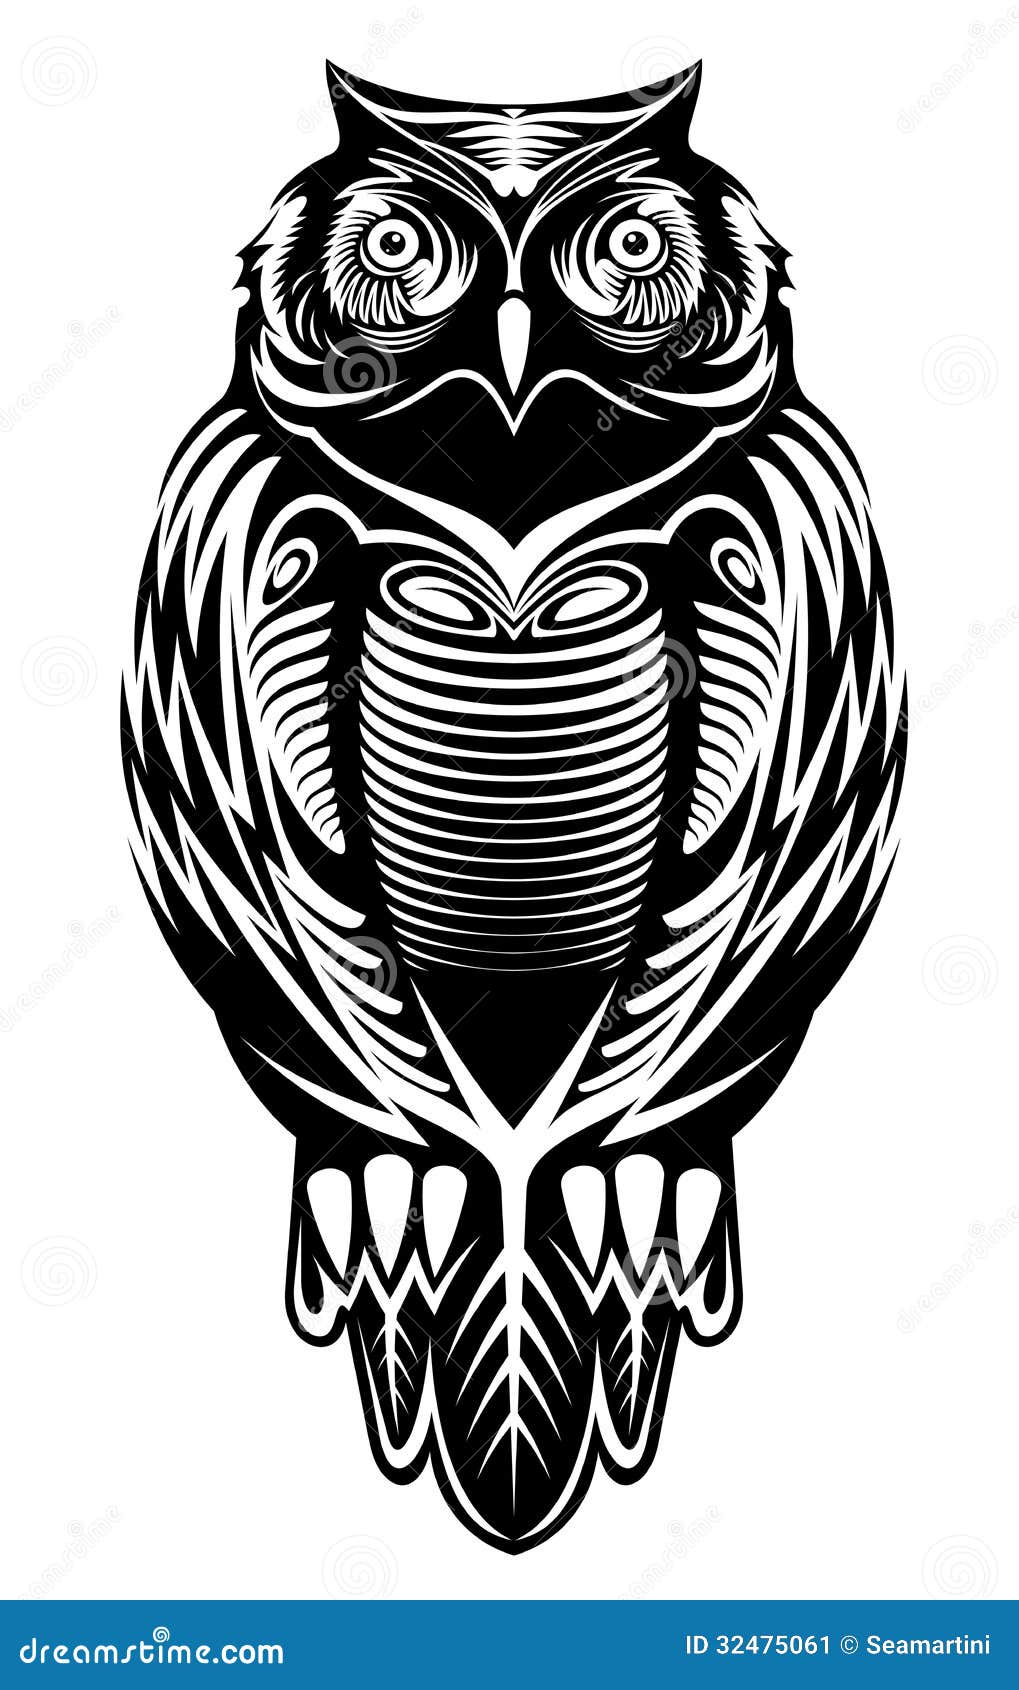 Majestic owl bird for mascot or tattoo design.